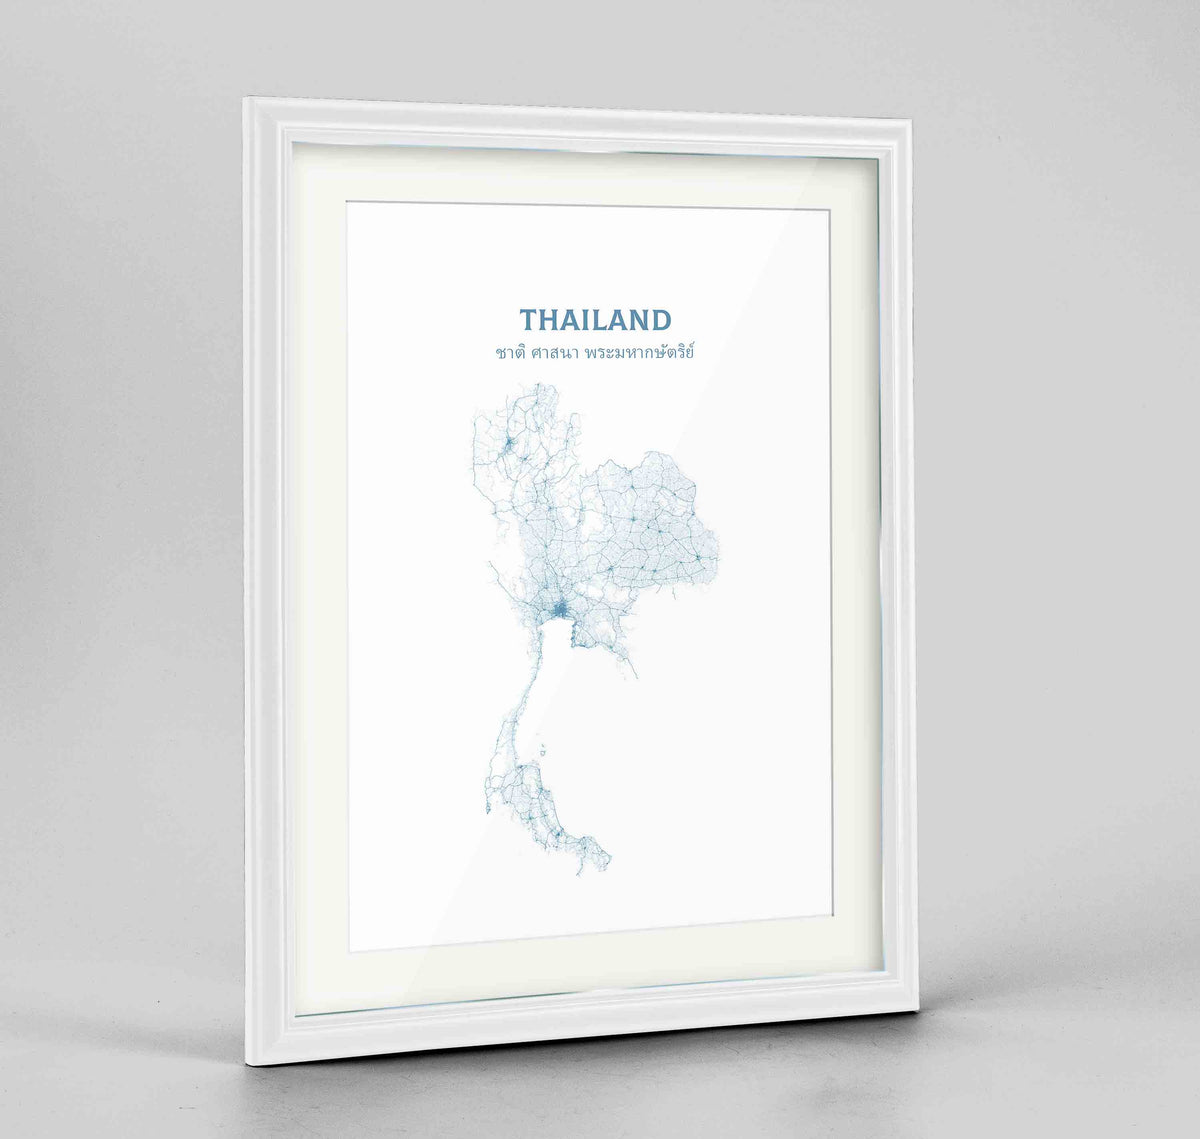 Thailand - All Roads Art Print - Framed